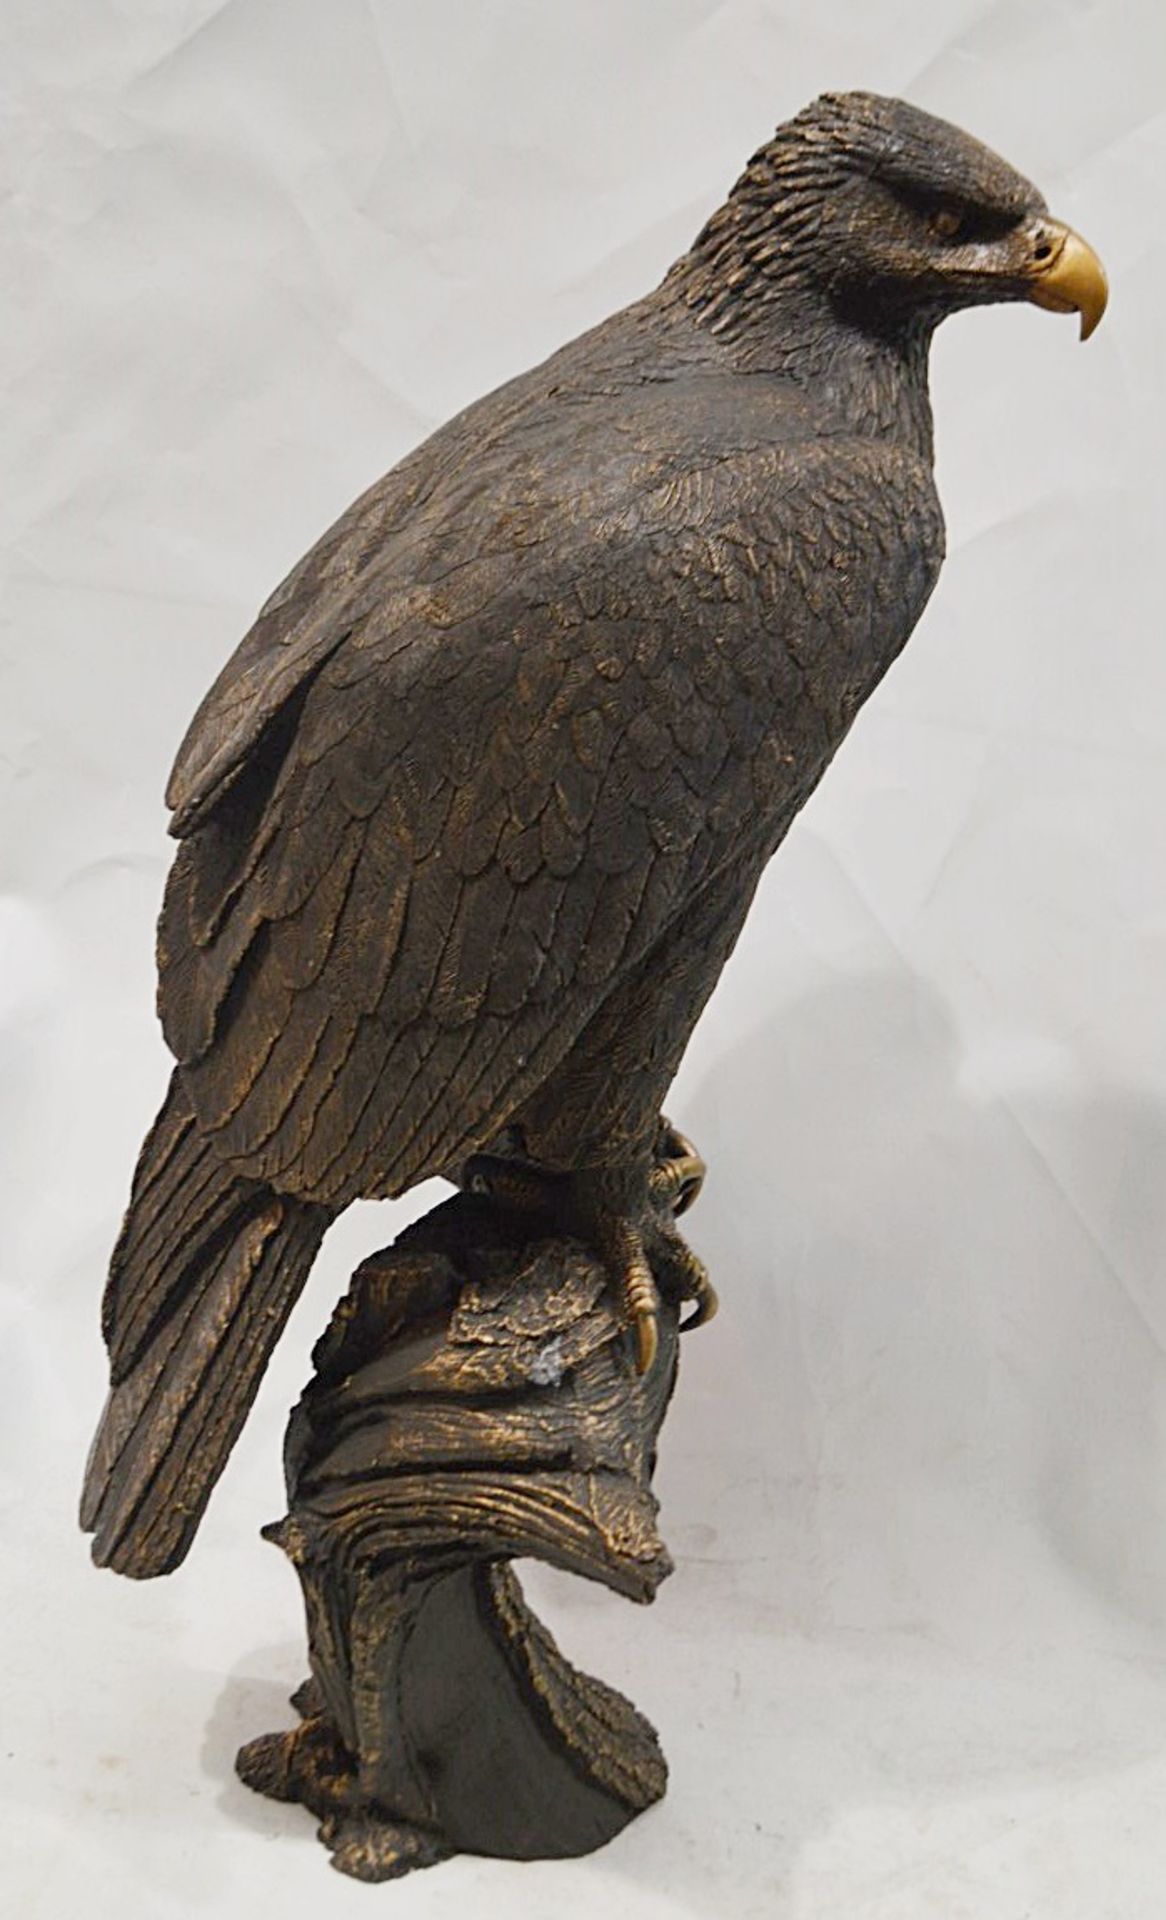 1 x Stefano Ricci Ornamental 1-Metre Tall Eagle Statue - Unique And Beautiful Designer Display Piece - Image 4 of 5